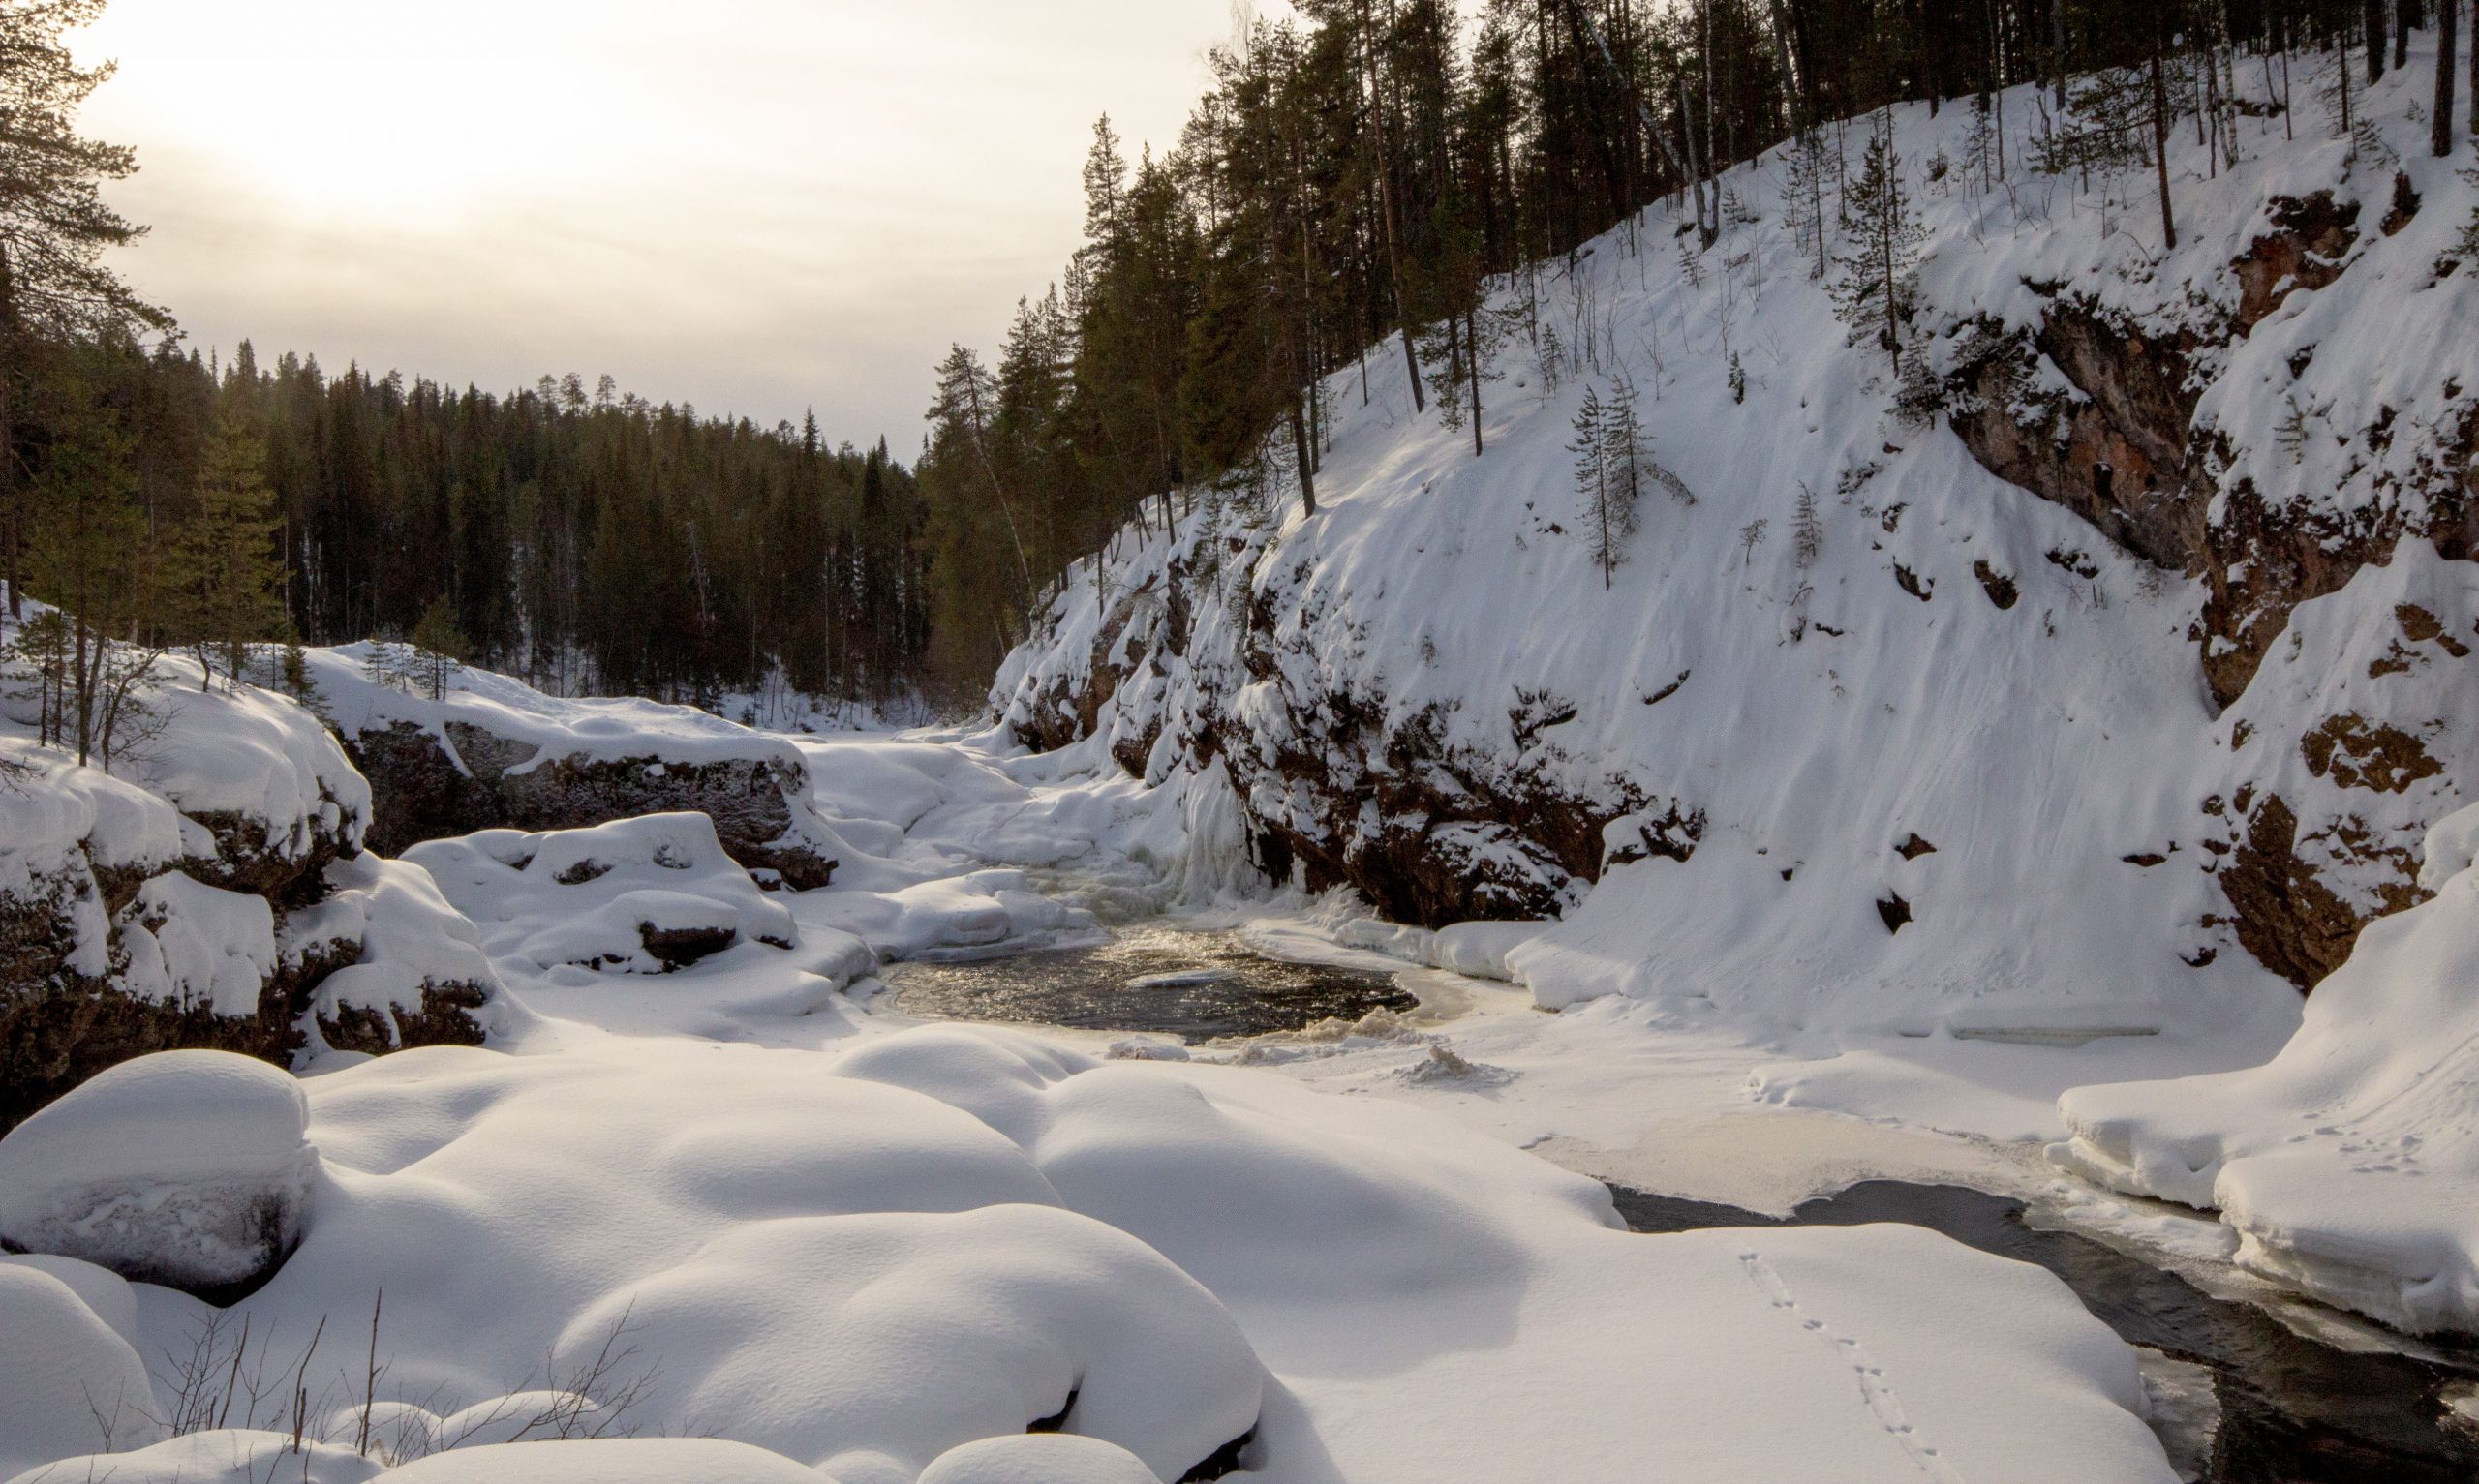 Partly frozen Kiutaköngäs Rapids in the winter